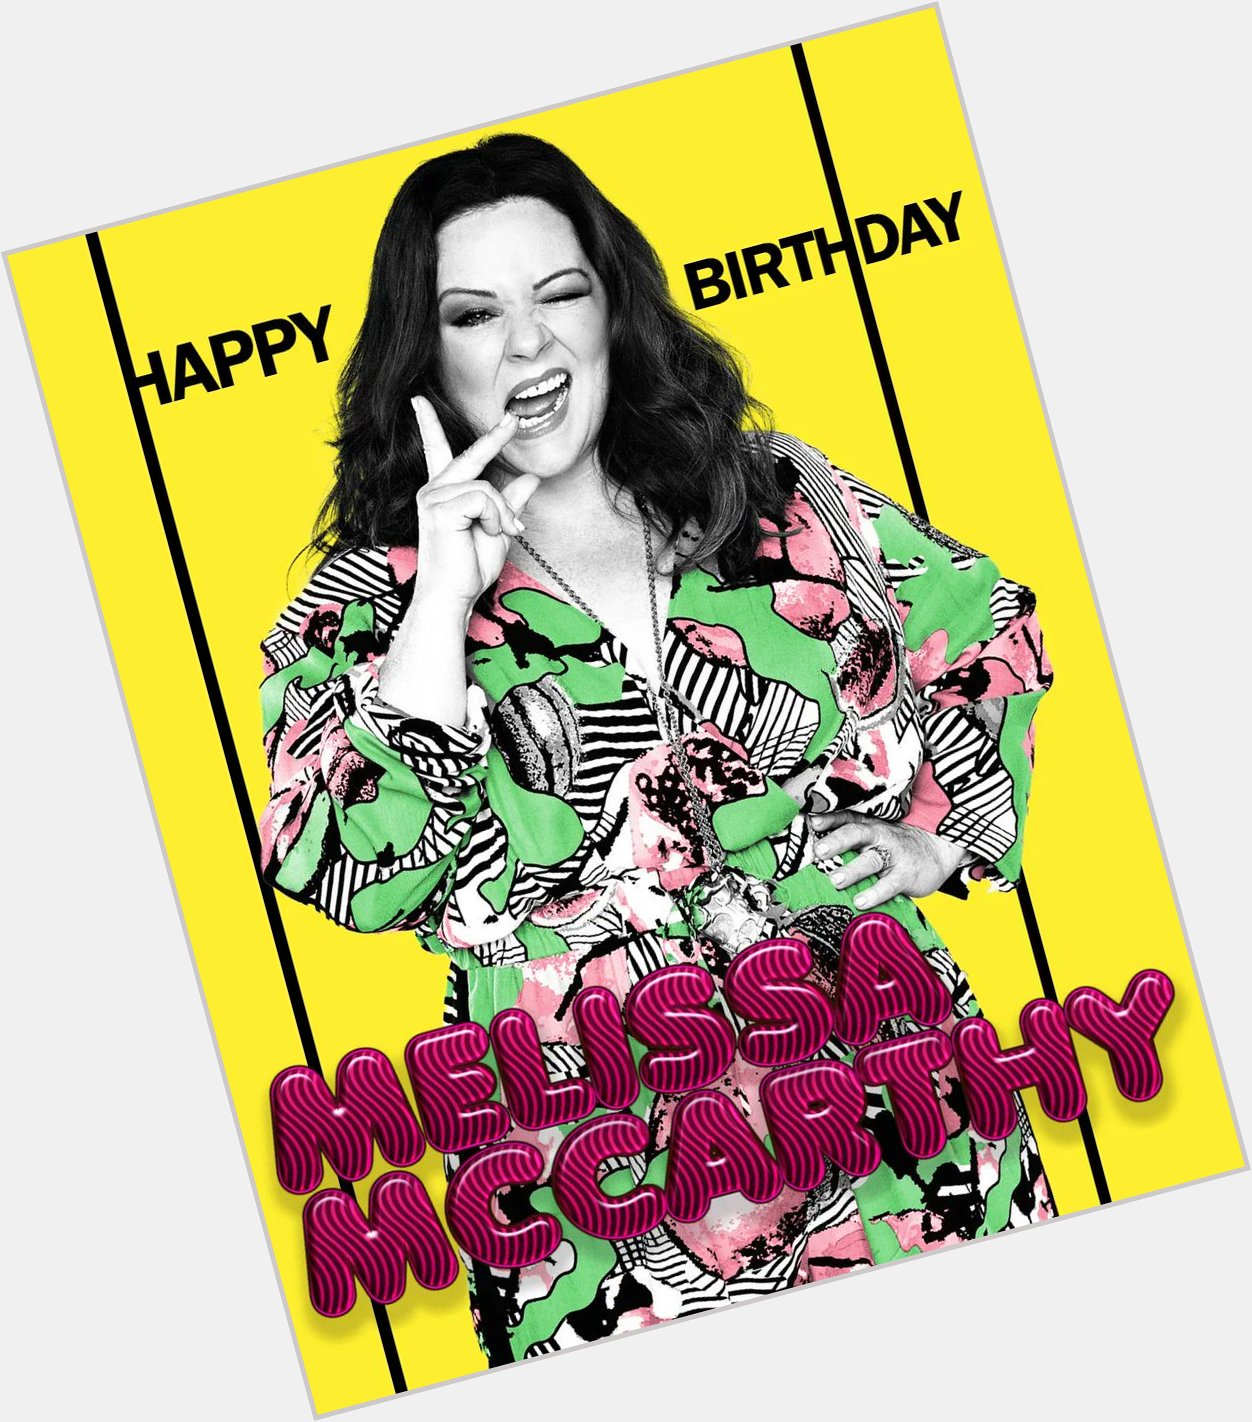   Happy birthday, Melissa McCarthy!!! 